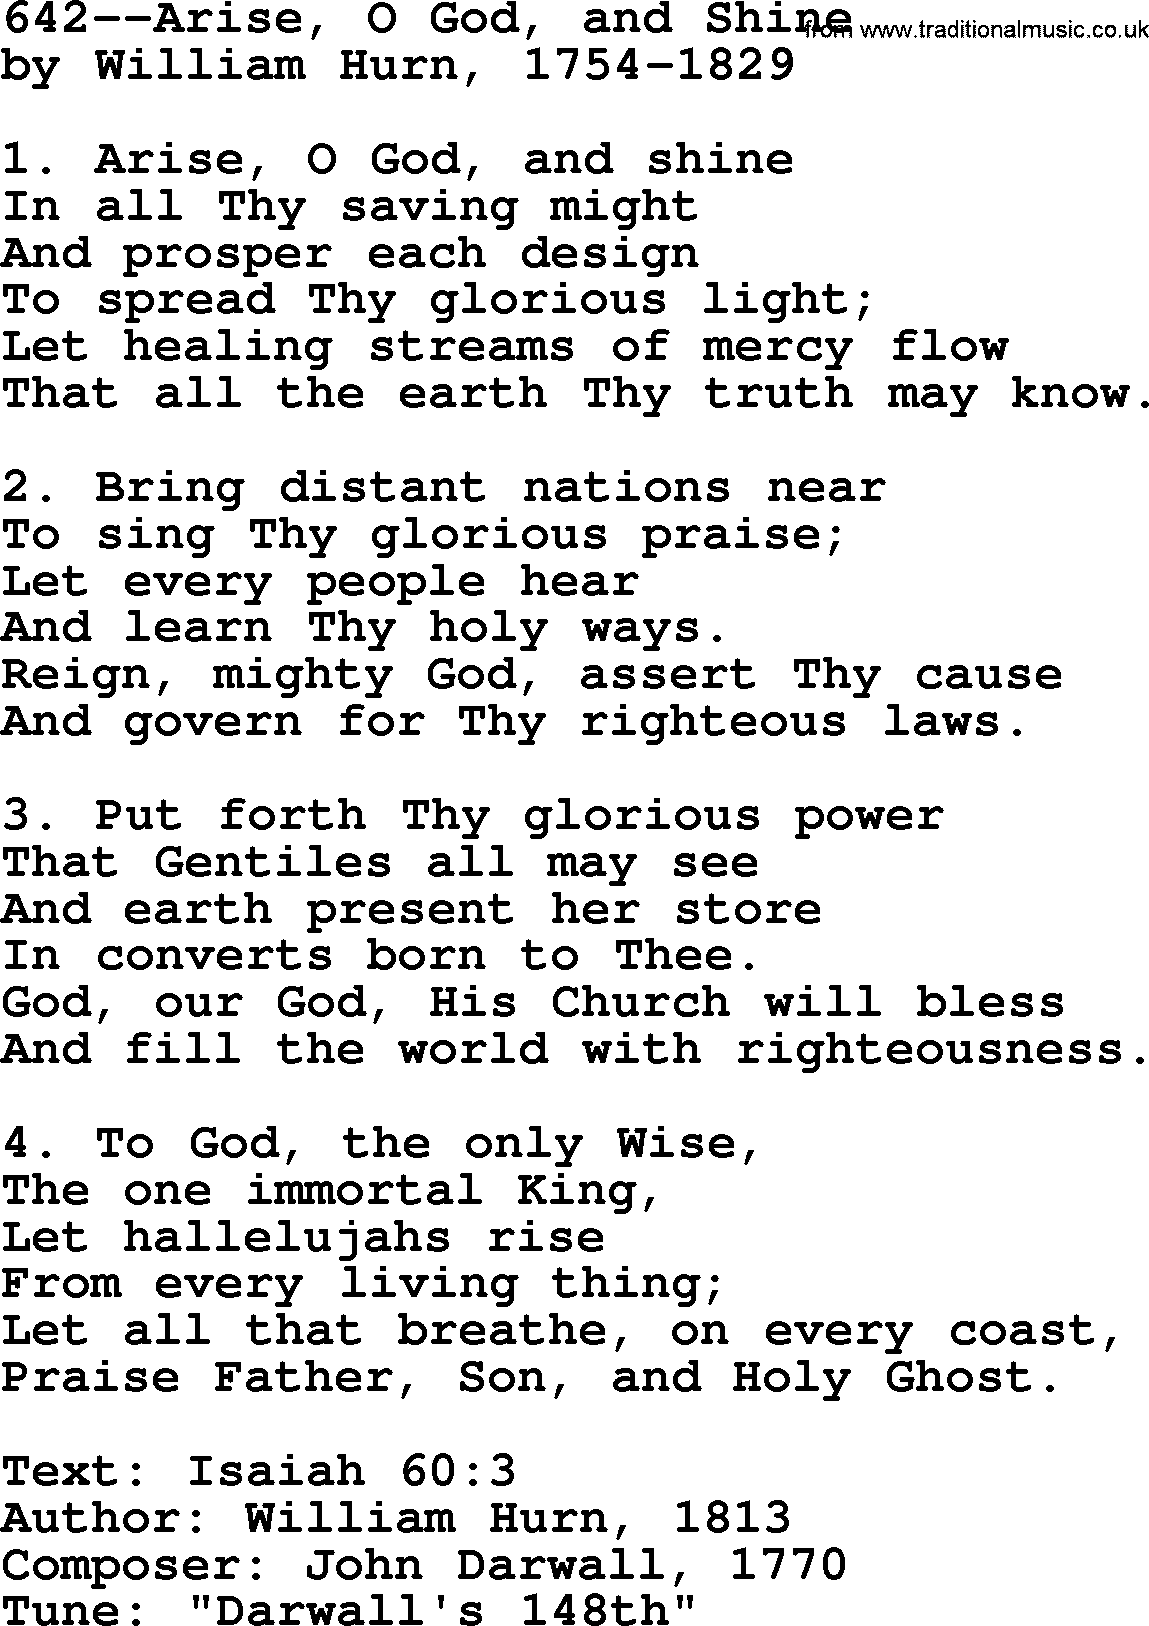 Lutheran Hymn: 642--Arise, O God, and Shine.txt lyrics with PDF